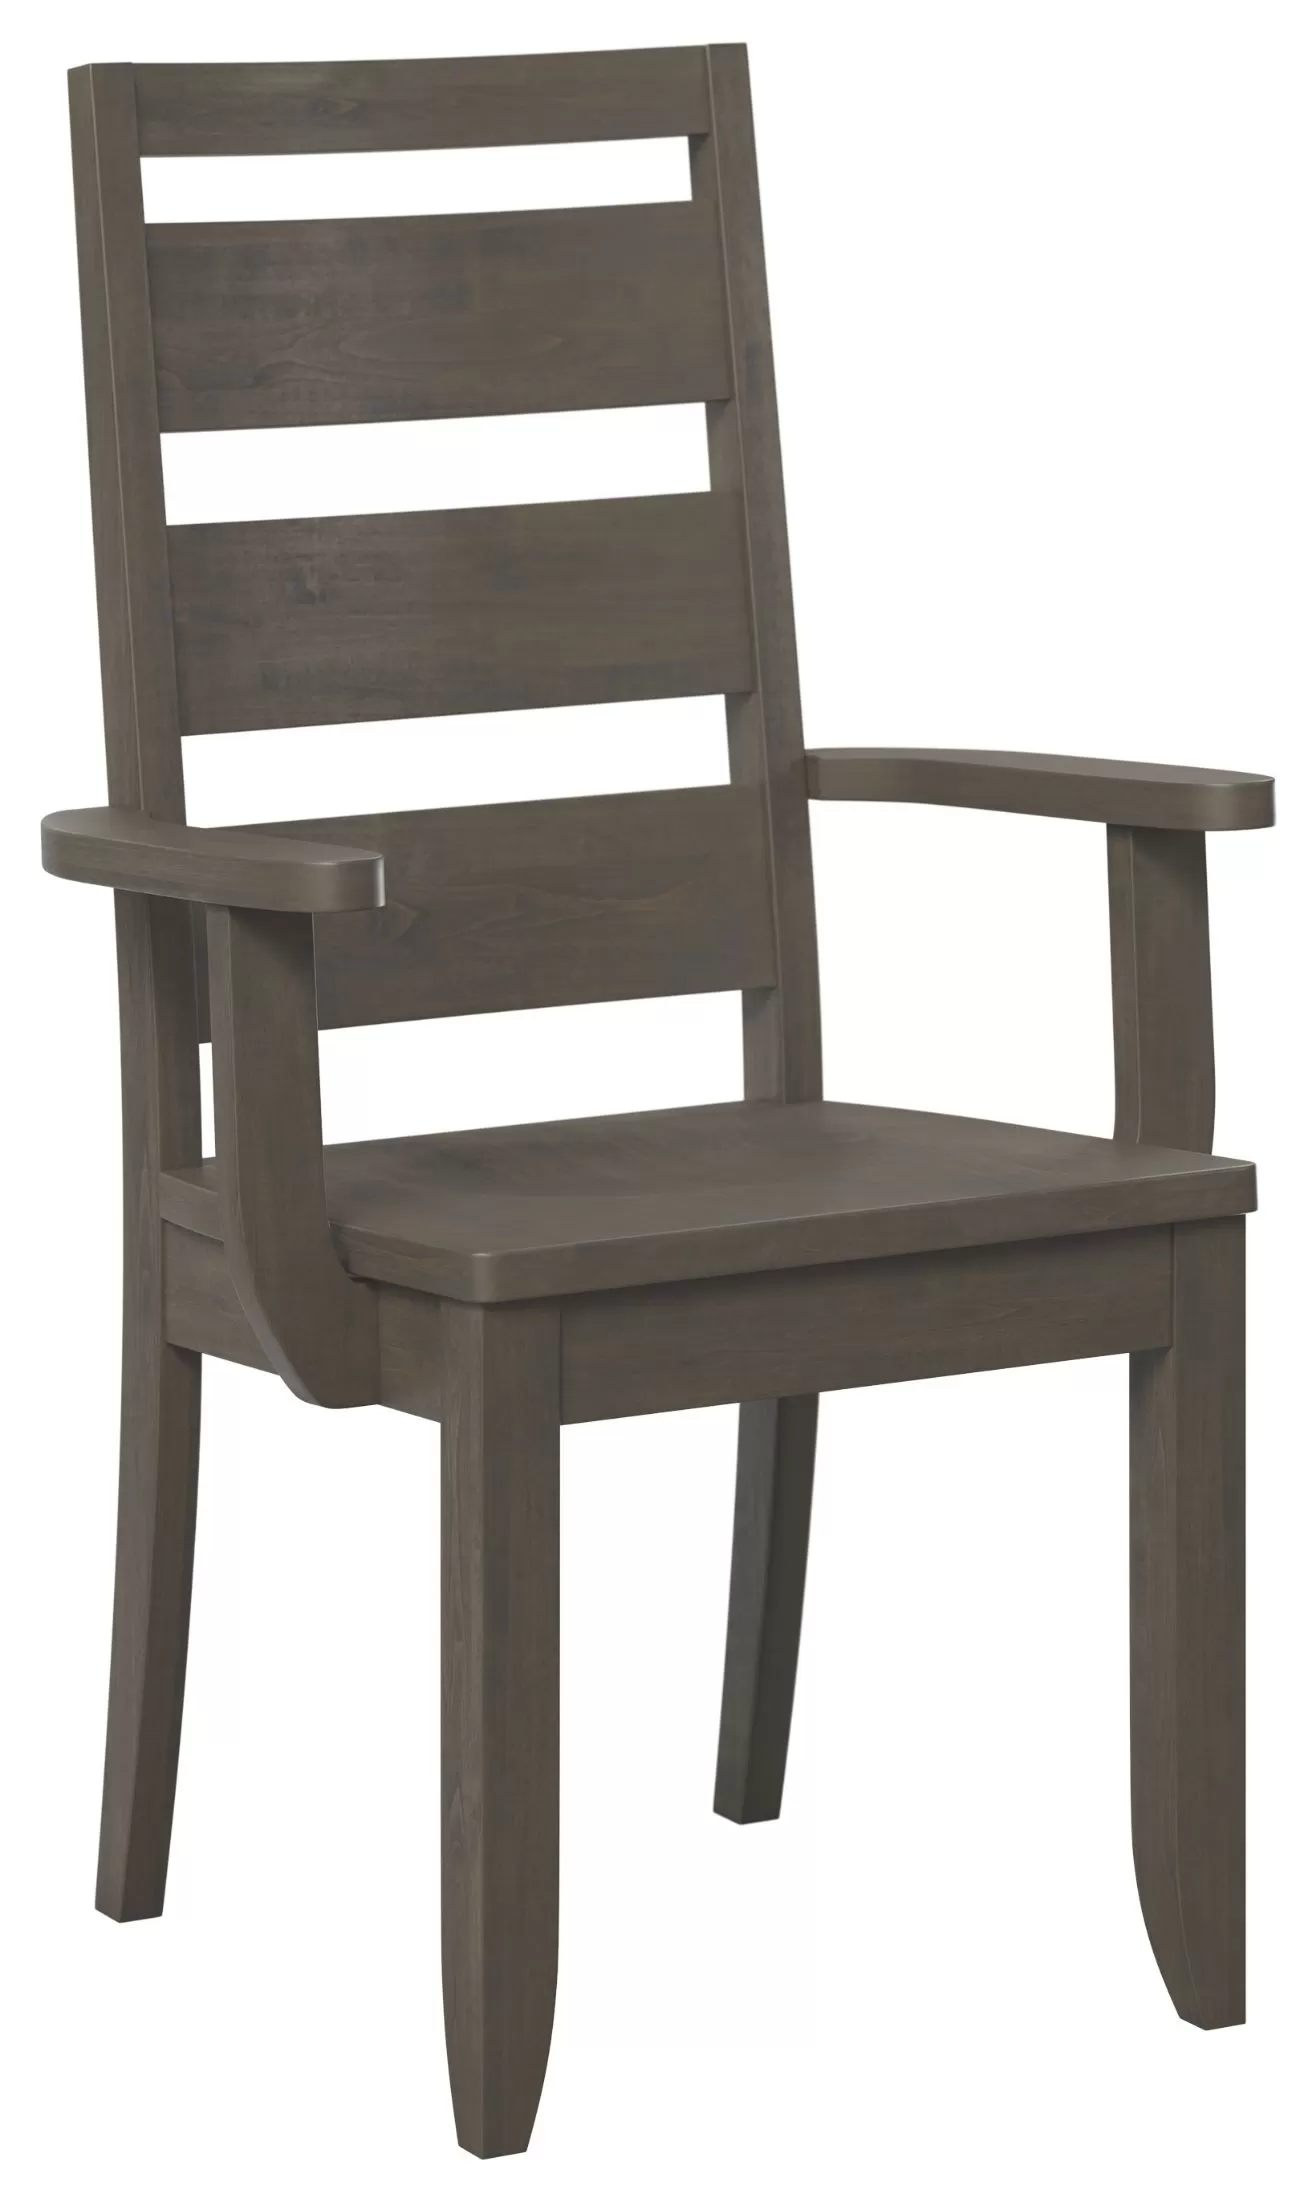 Lakeland arm chair